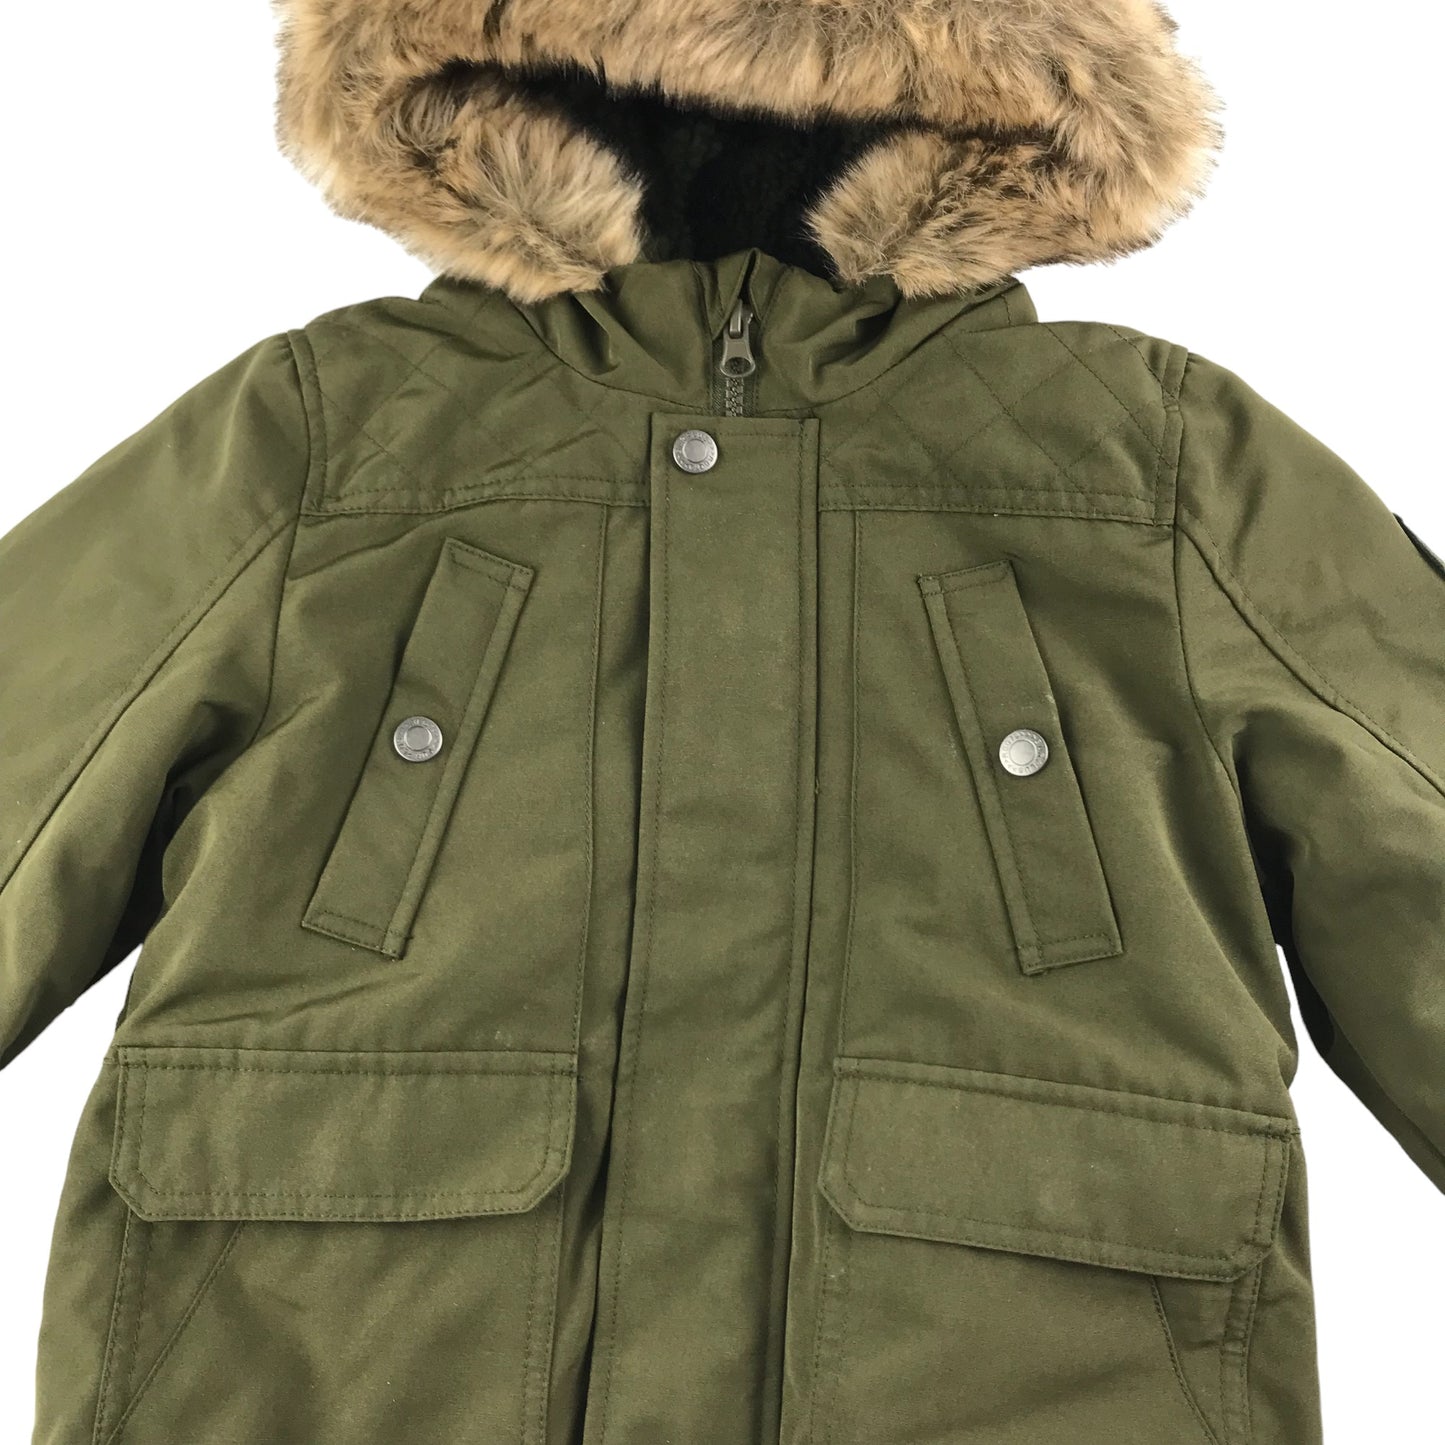 George Jacket Age 6 Khaki Green Parka with Faux Fur Hood